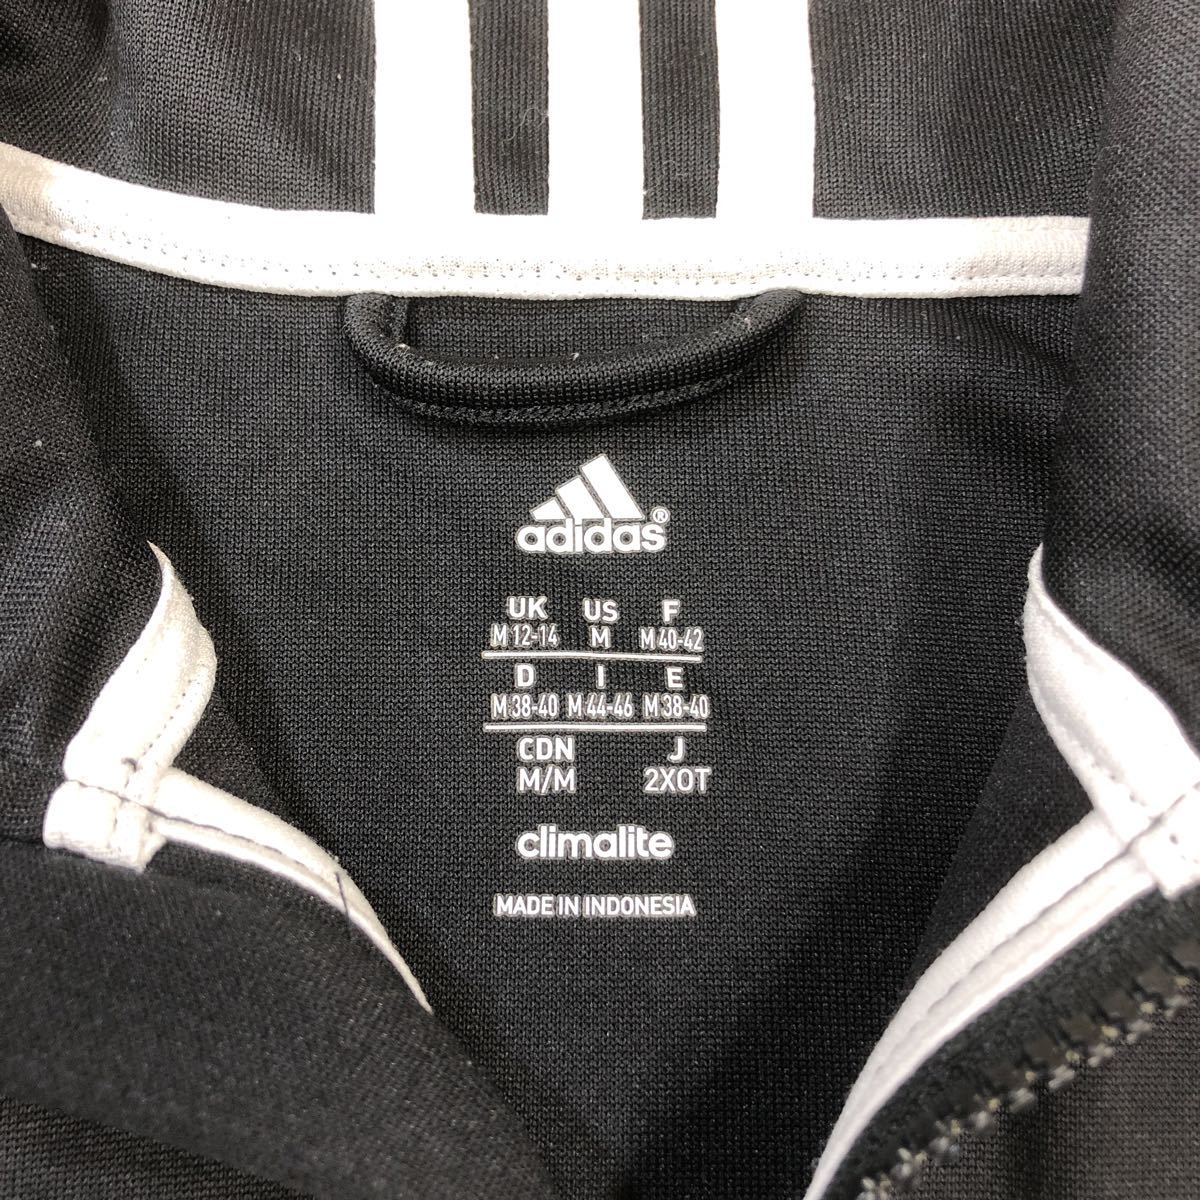 adidas Adidas sportswear jersey part shop put on running soccer lady's 2XOT 21-32a